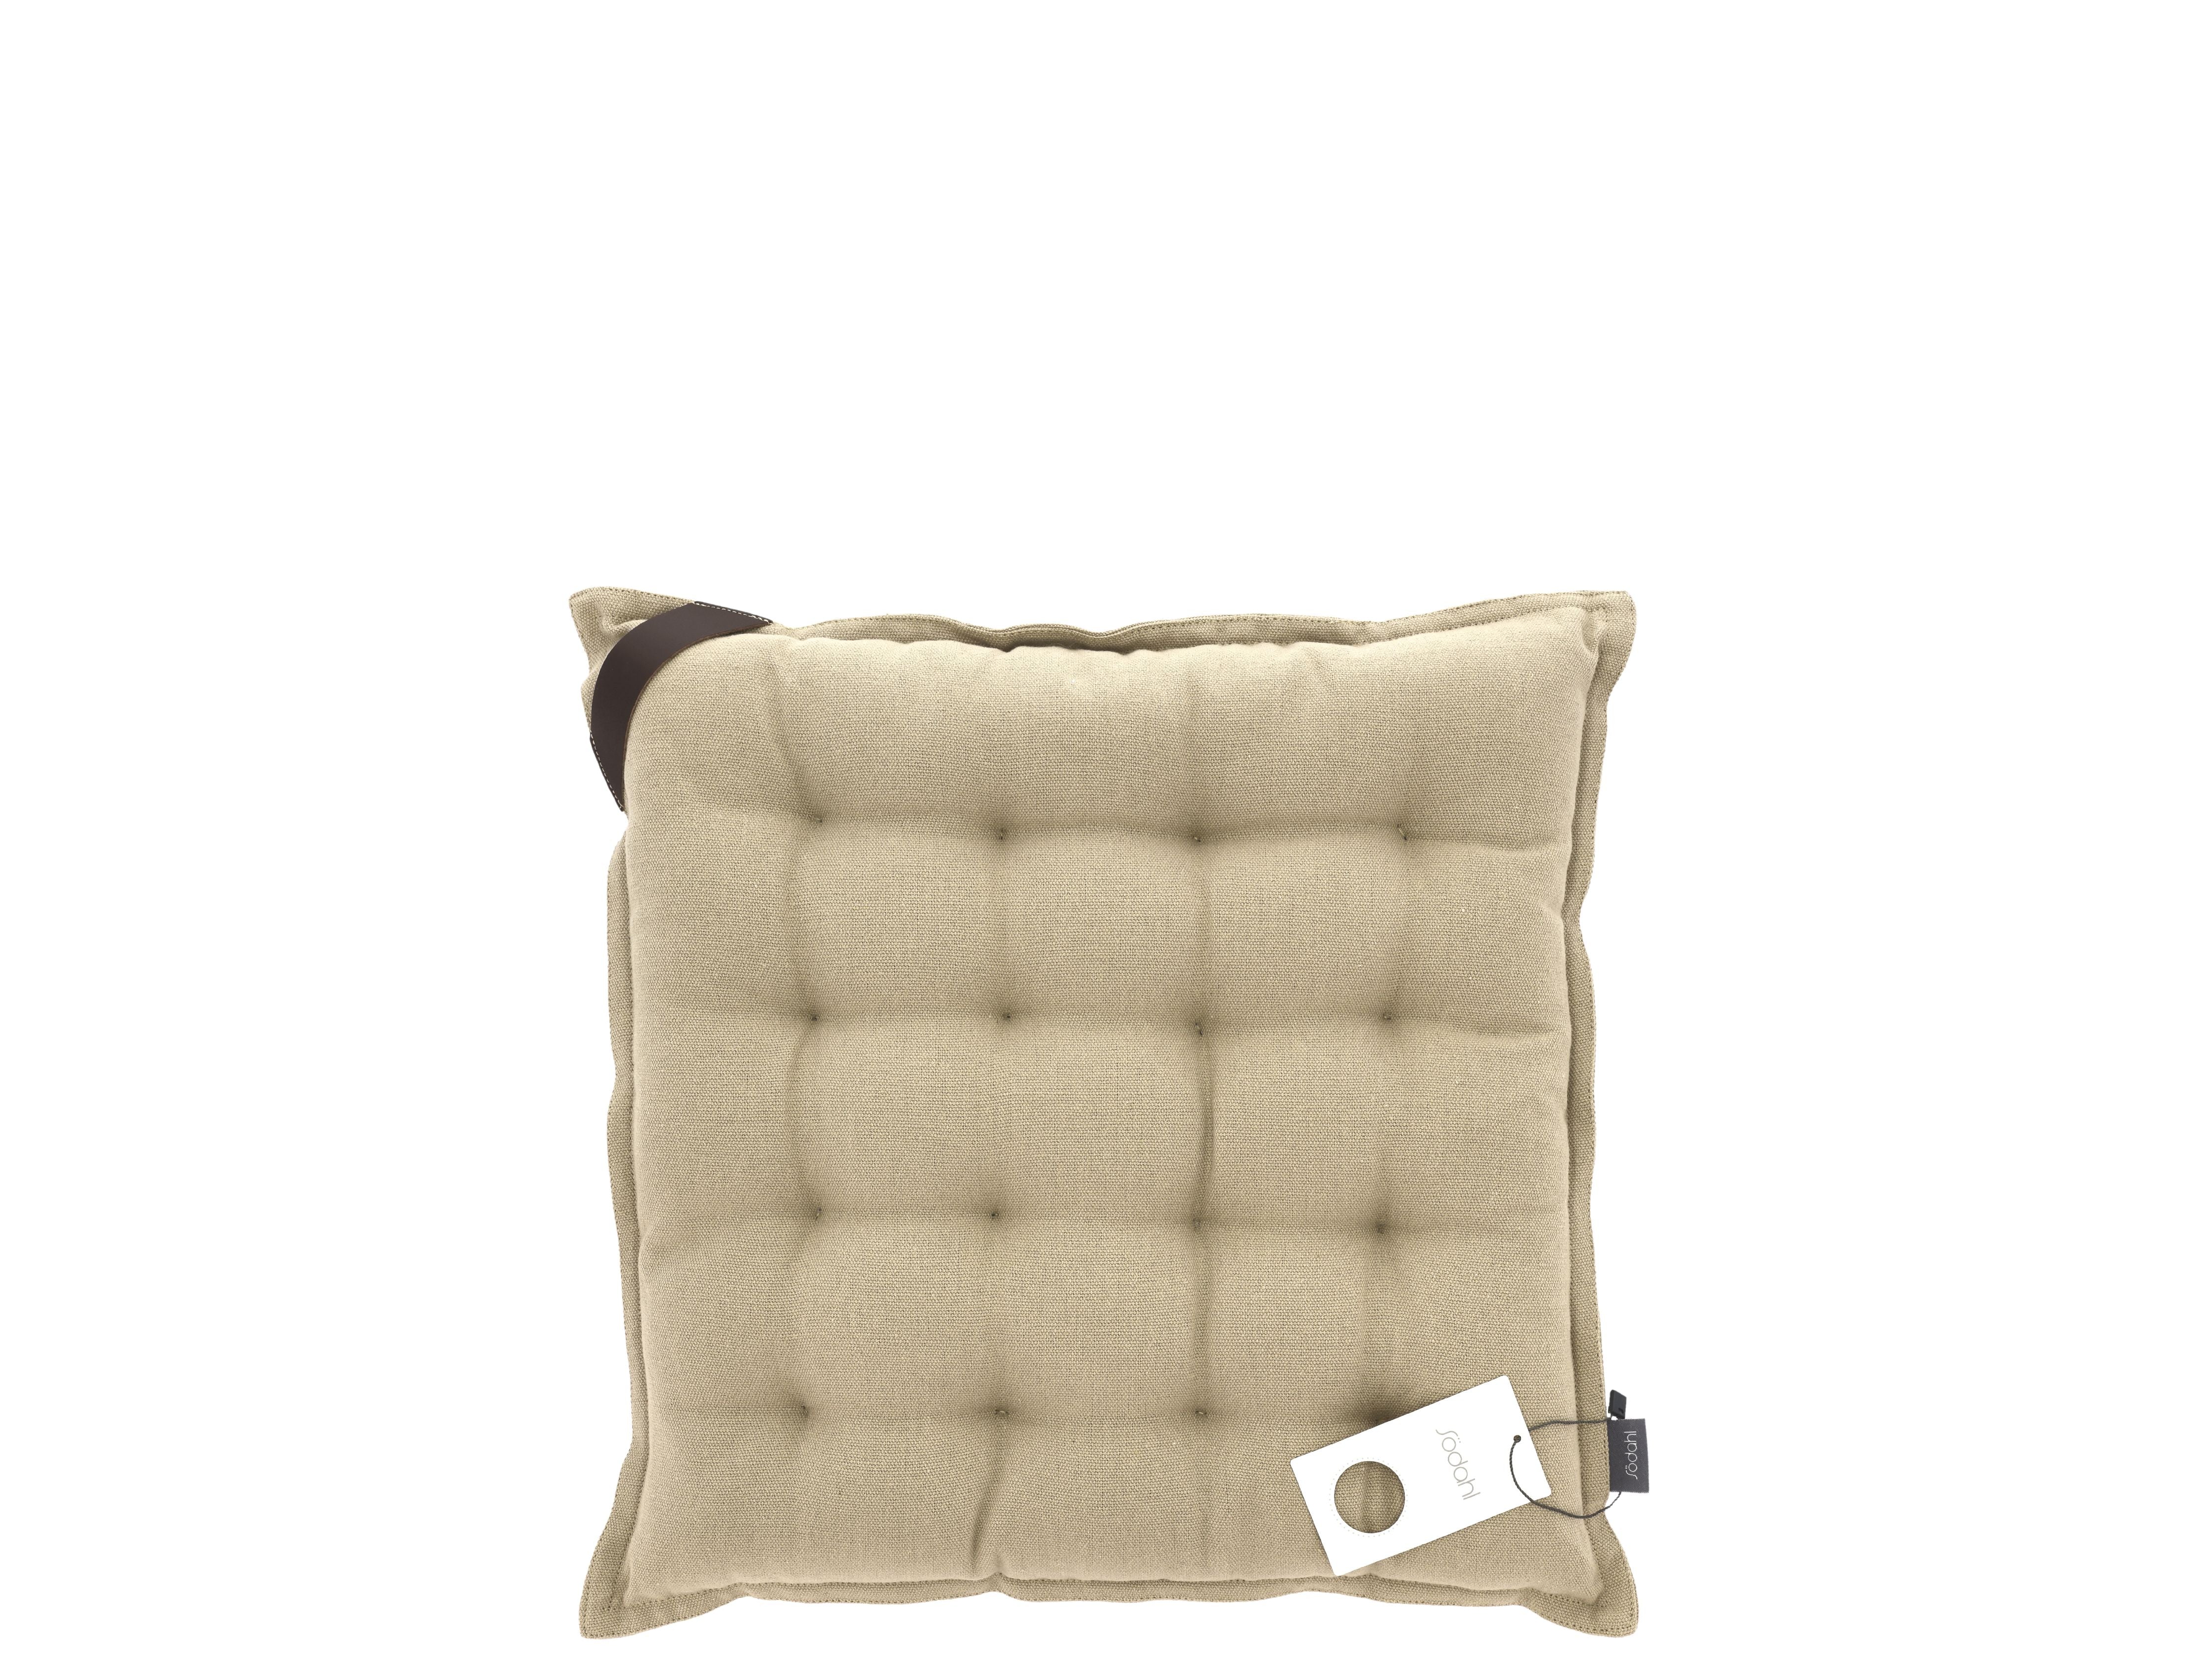 Södahl Match Seat Cushion 40 X 40 Cm, Pine Green